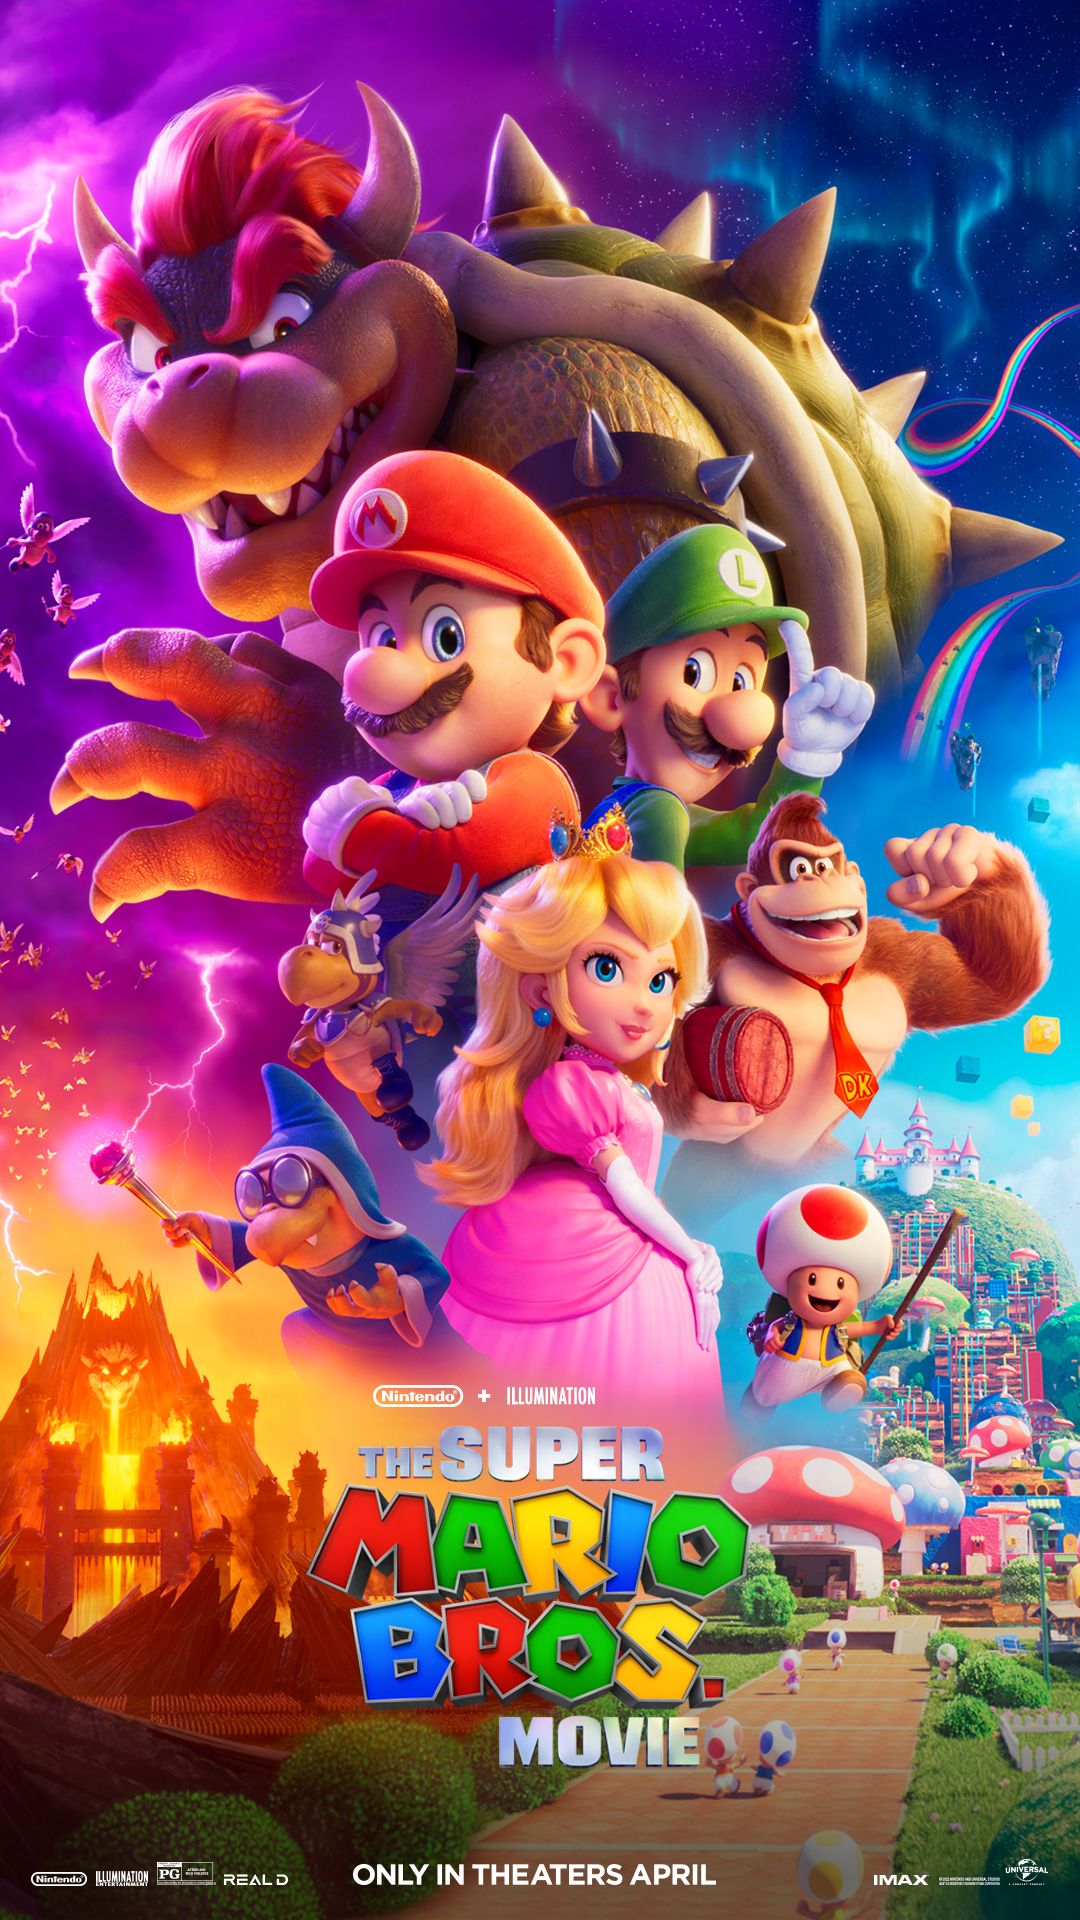 The Official Super Mario Bros. Movie Poster